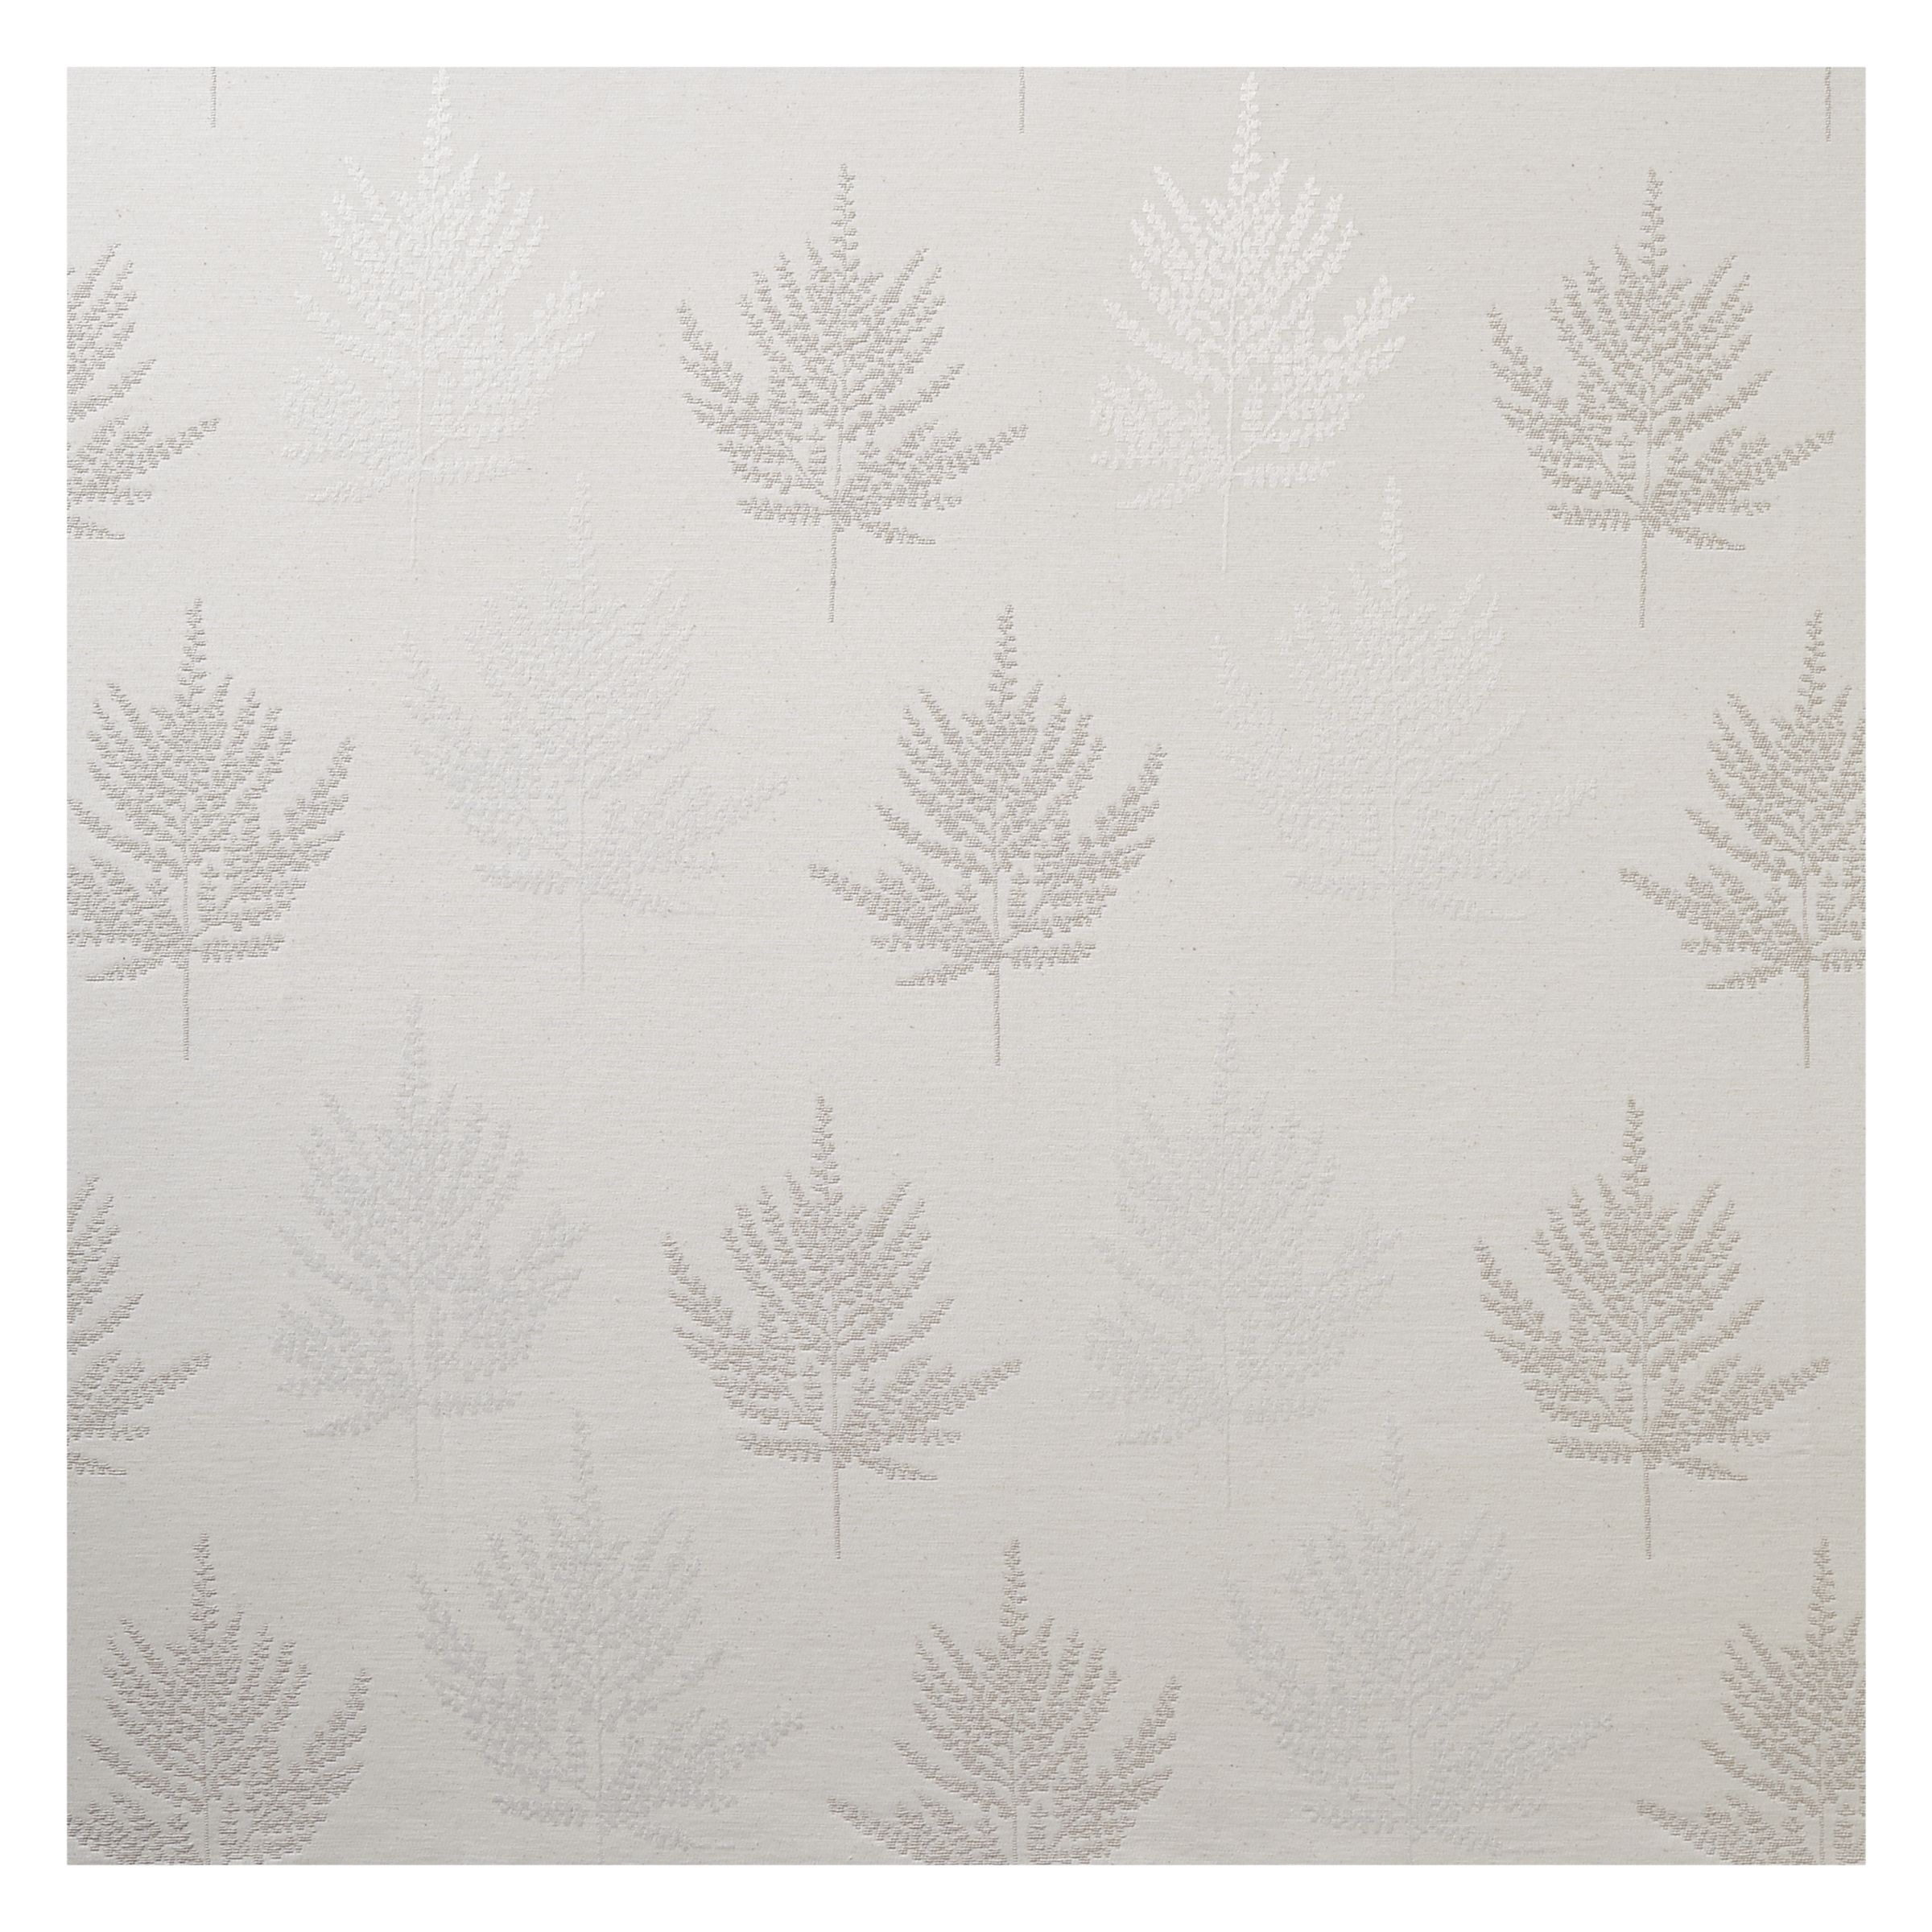 John Lewis & Partners Serenity Linen Furnishing Fabric, Natural